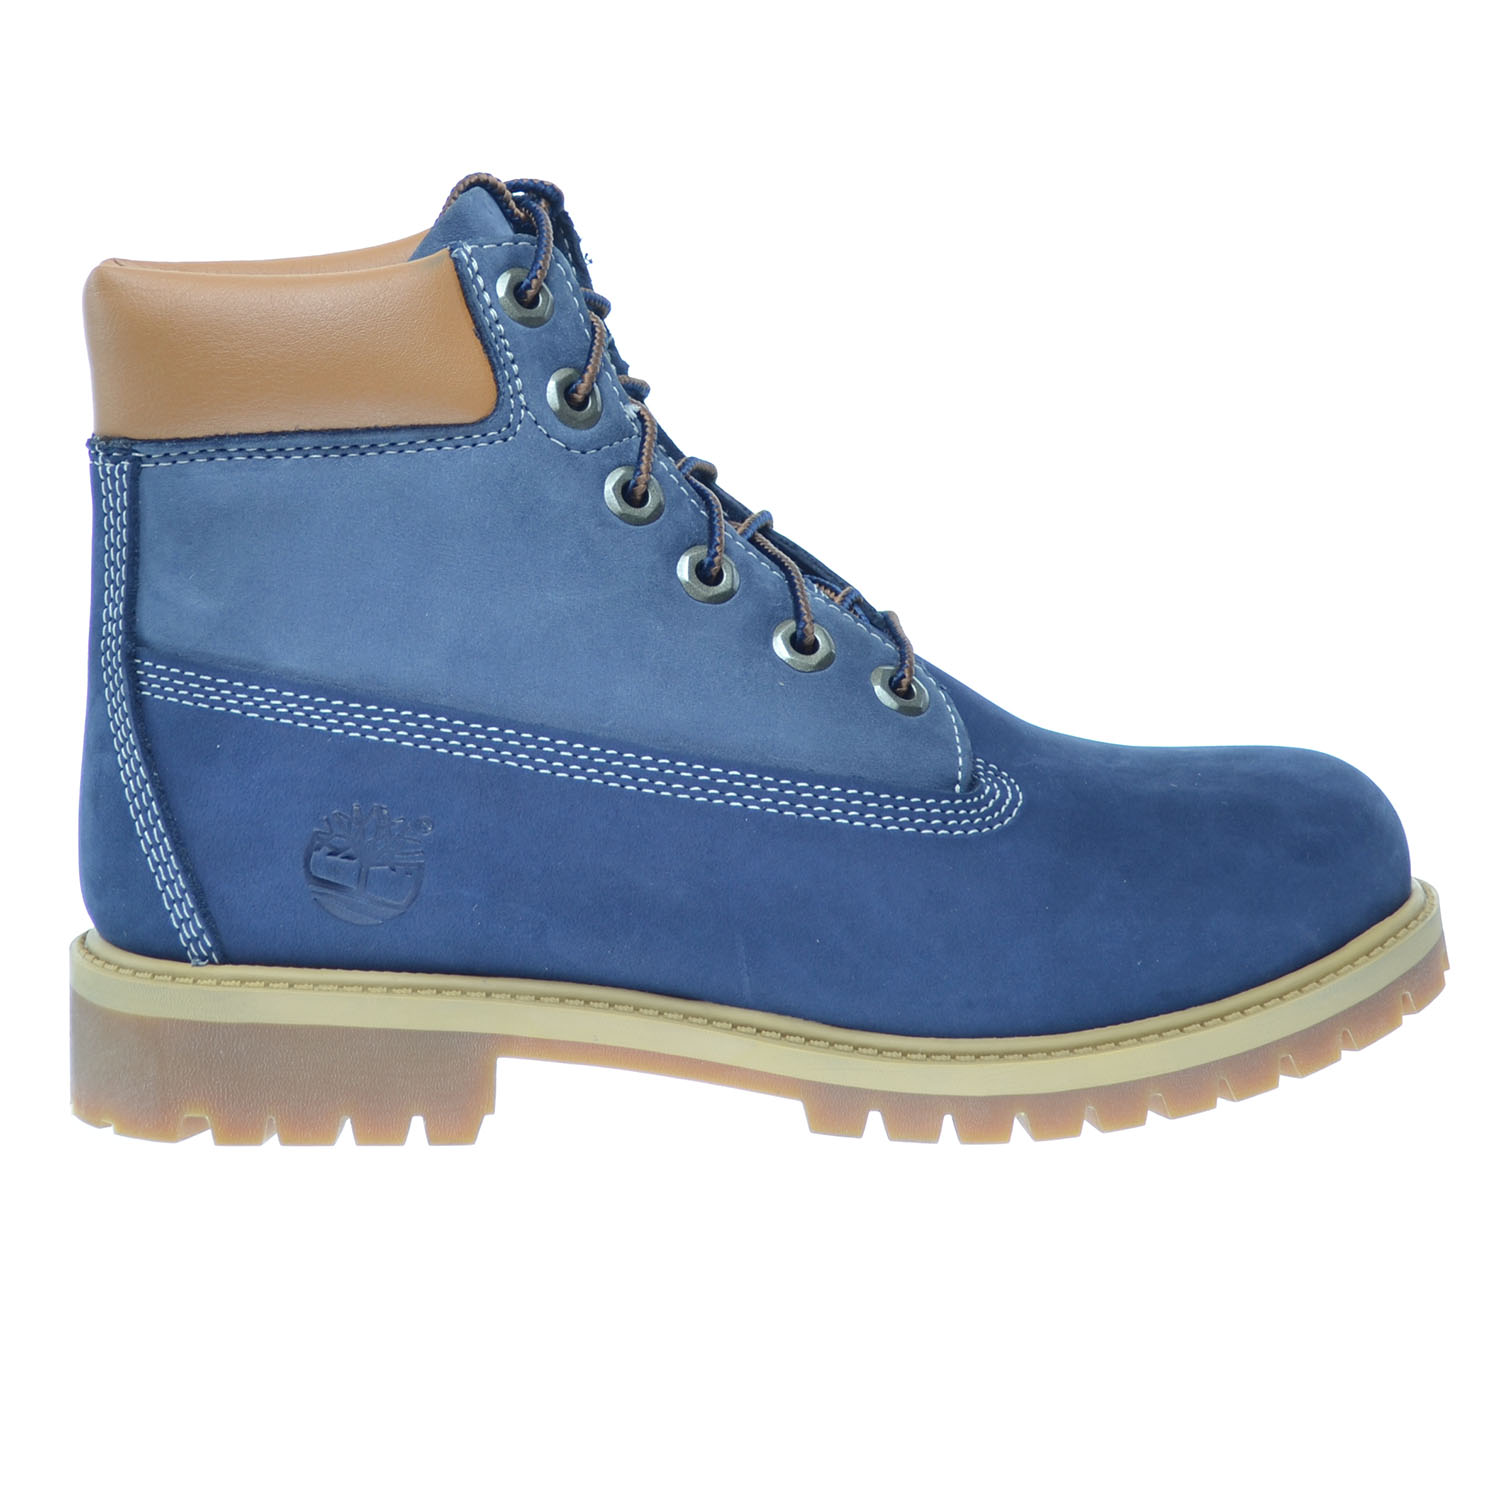 Kids Waterproof Boots Blue-Light Blue 